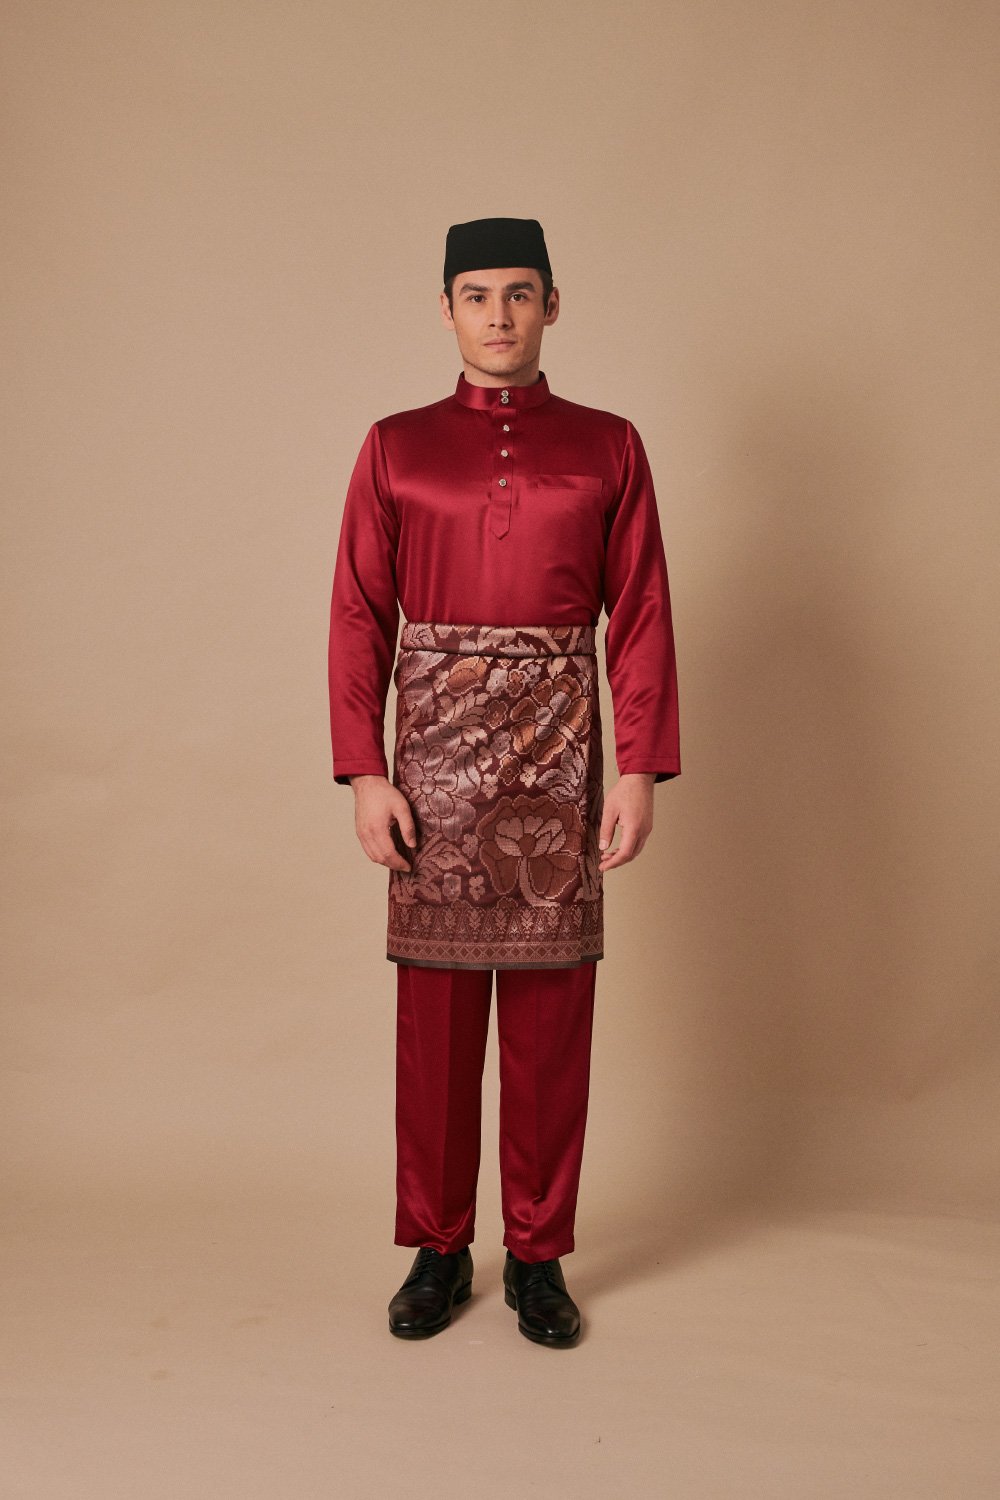 Baju Melayu in Burgundy